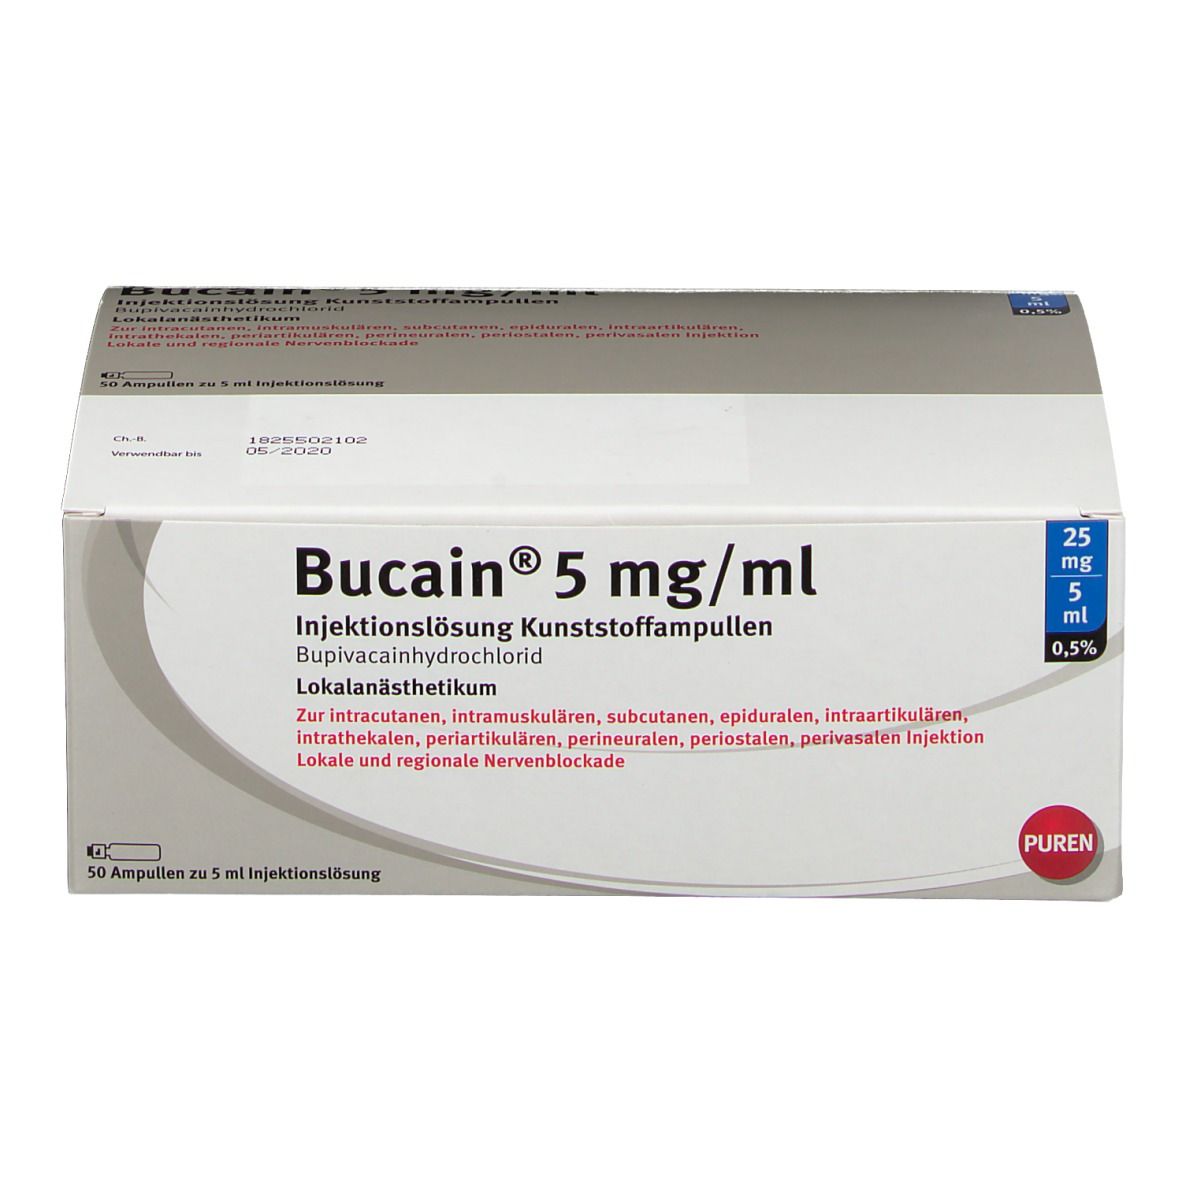 Bucain® 5 mg/ml